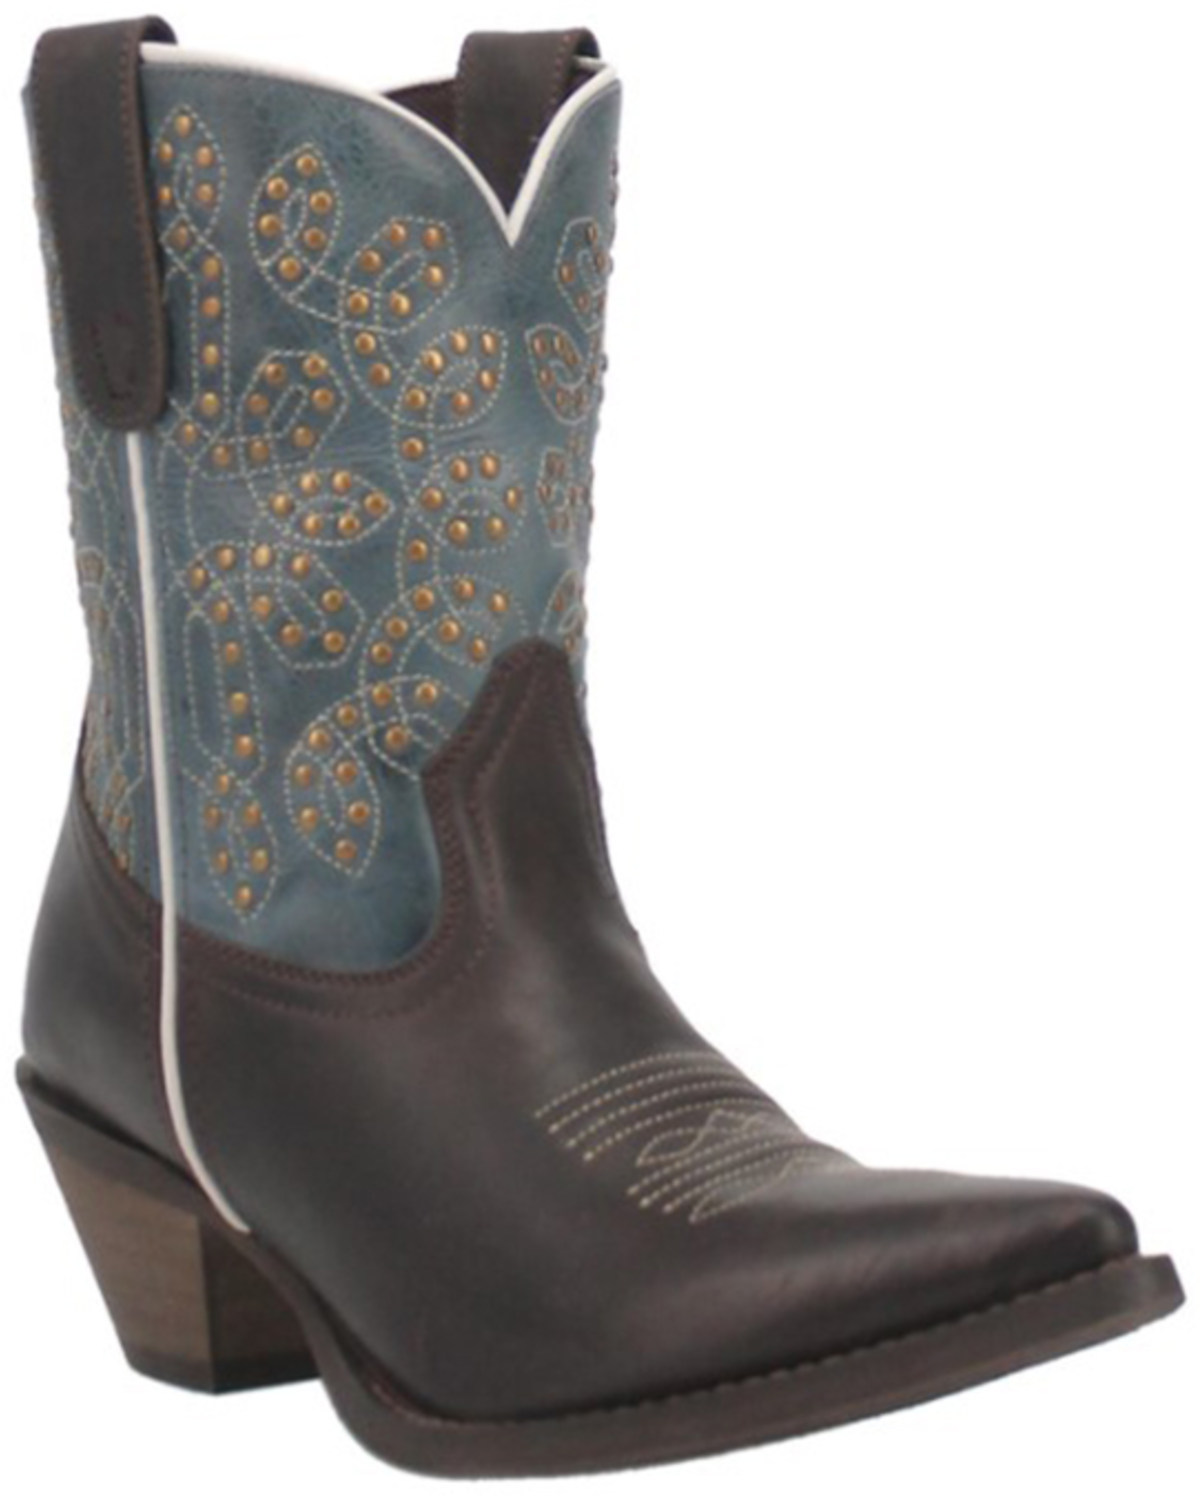 Laredo Women's Randee Western Boots - Snip Toe